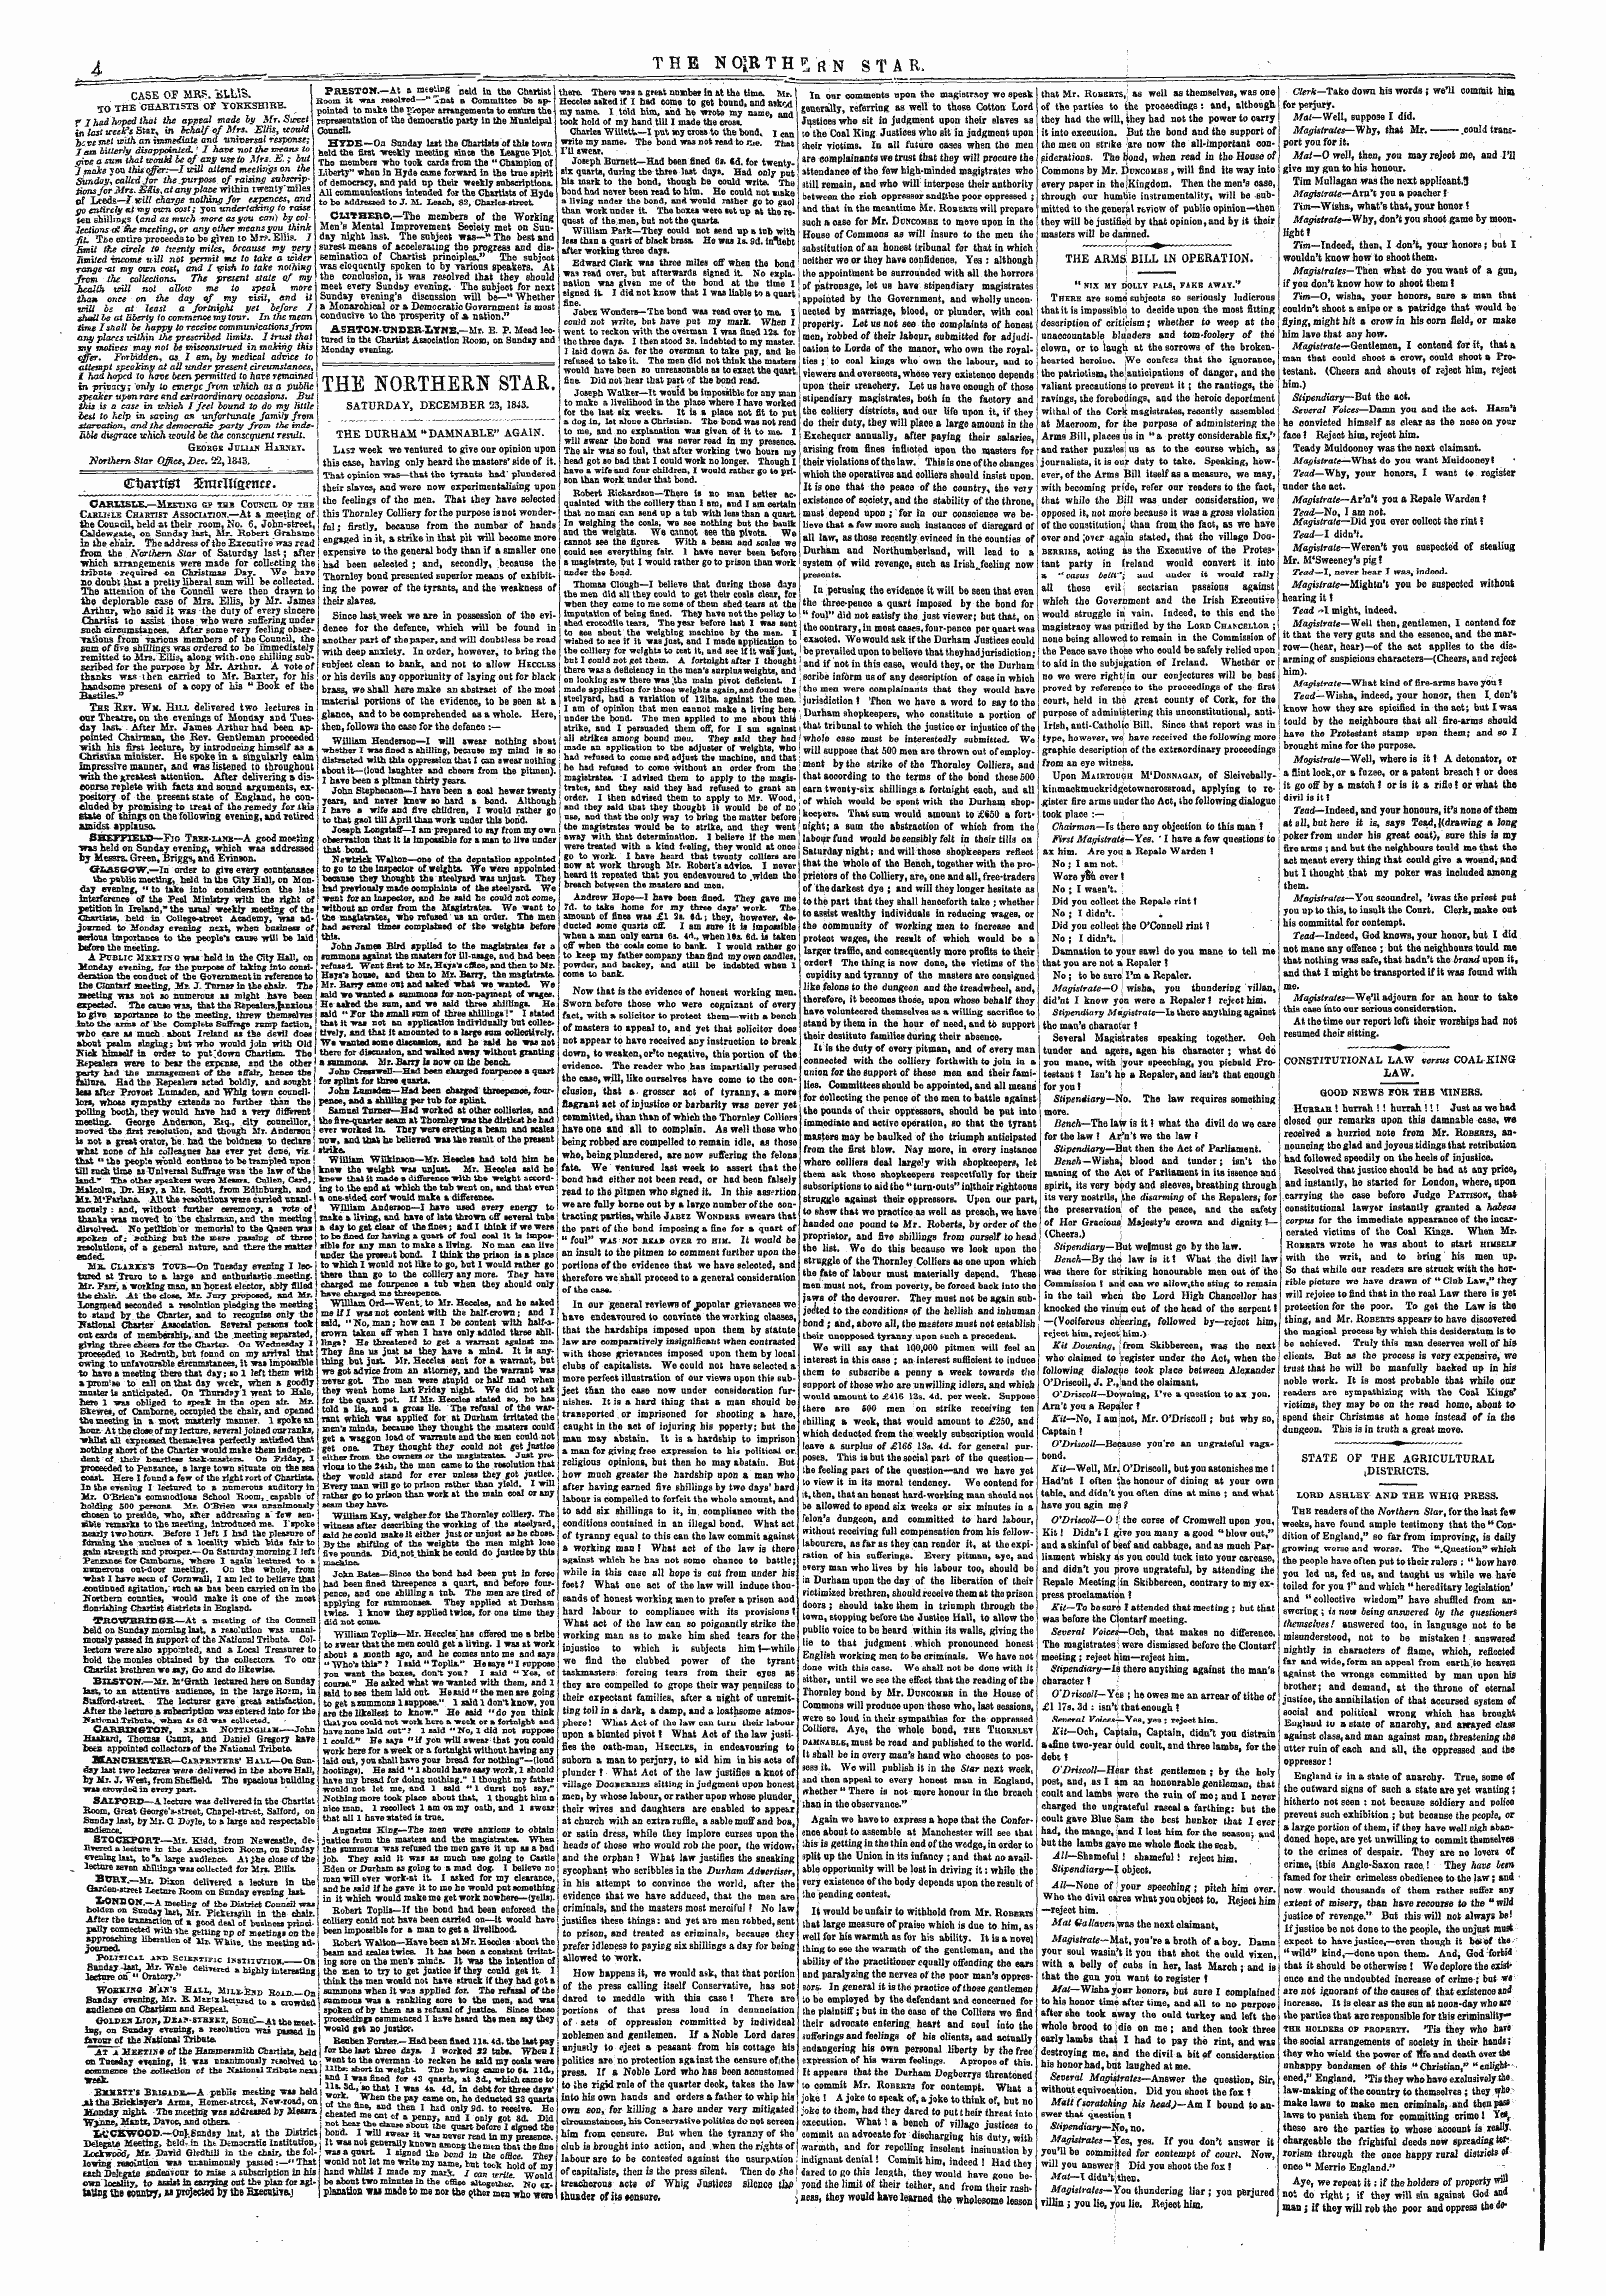 Northern Star (1837-1852): jS F Y, 2nd edition - Ctartfgi Smrift'snit?.